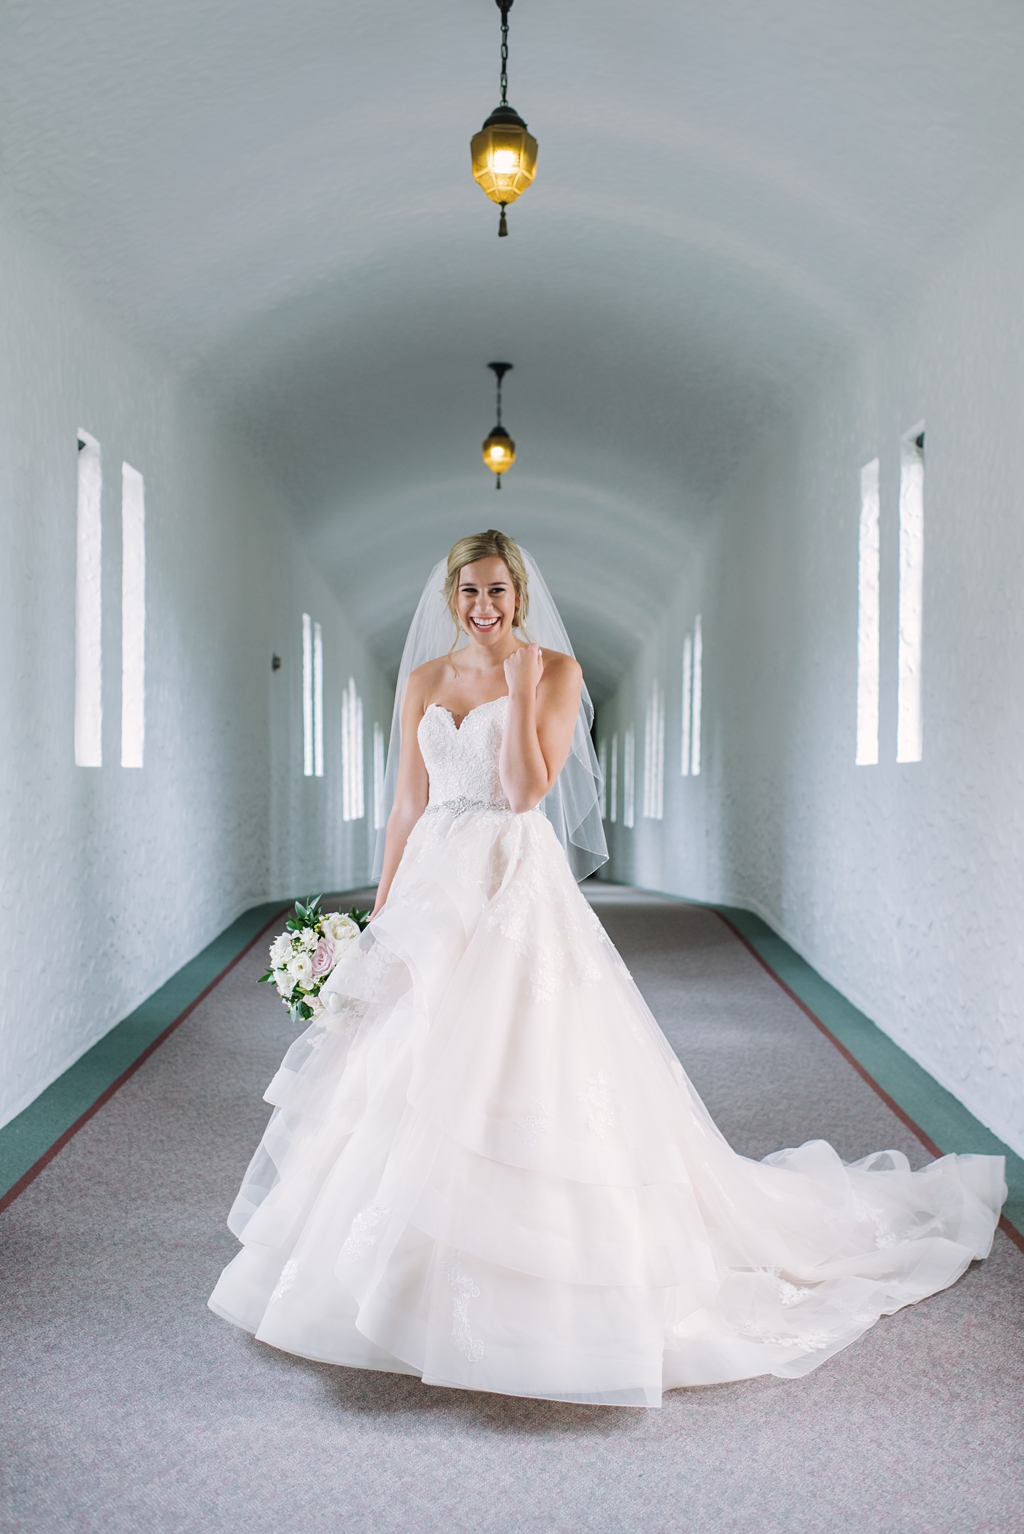 bride laughing in church hallway